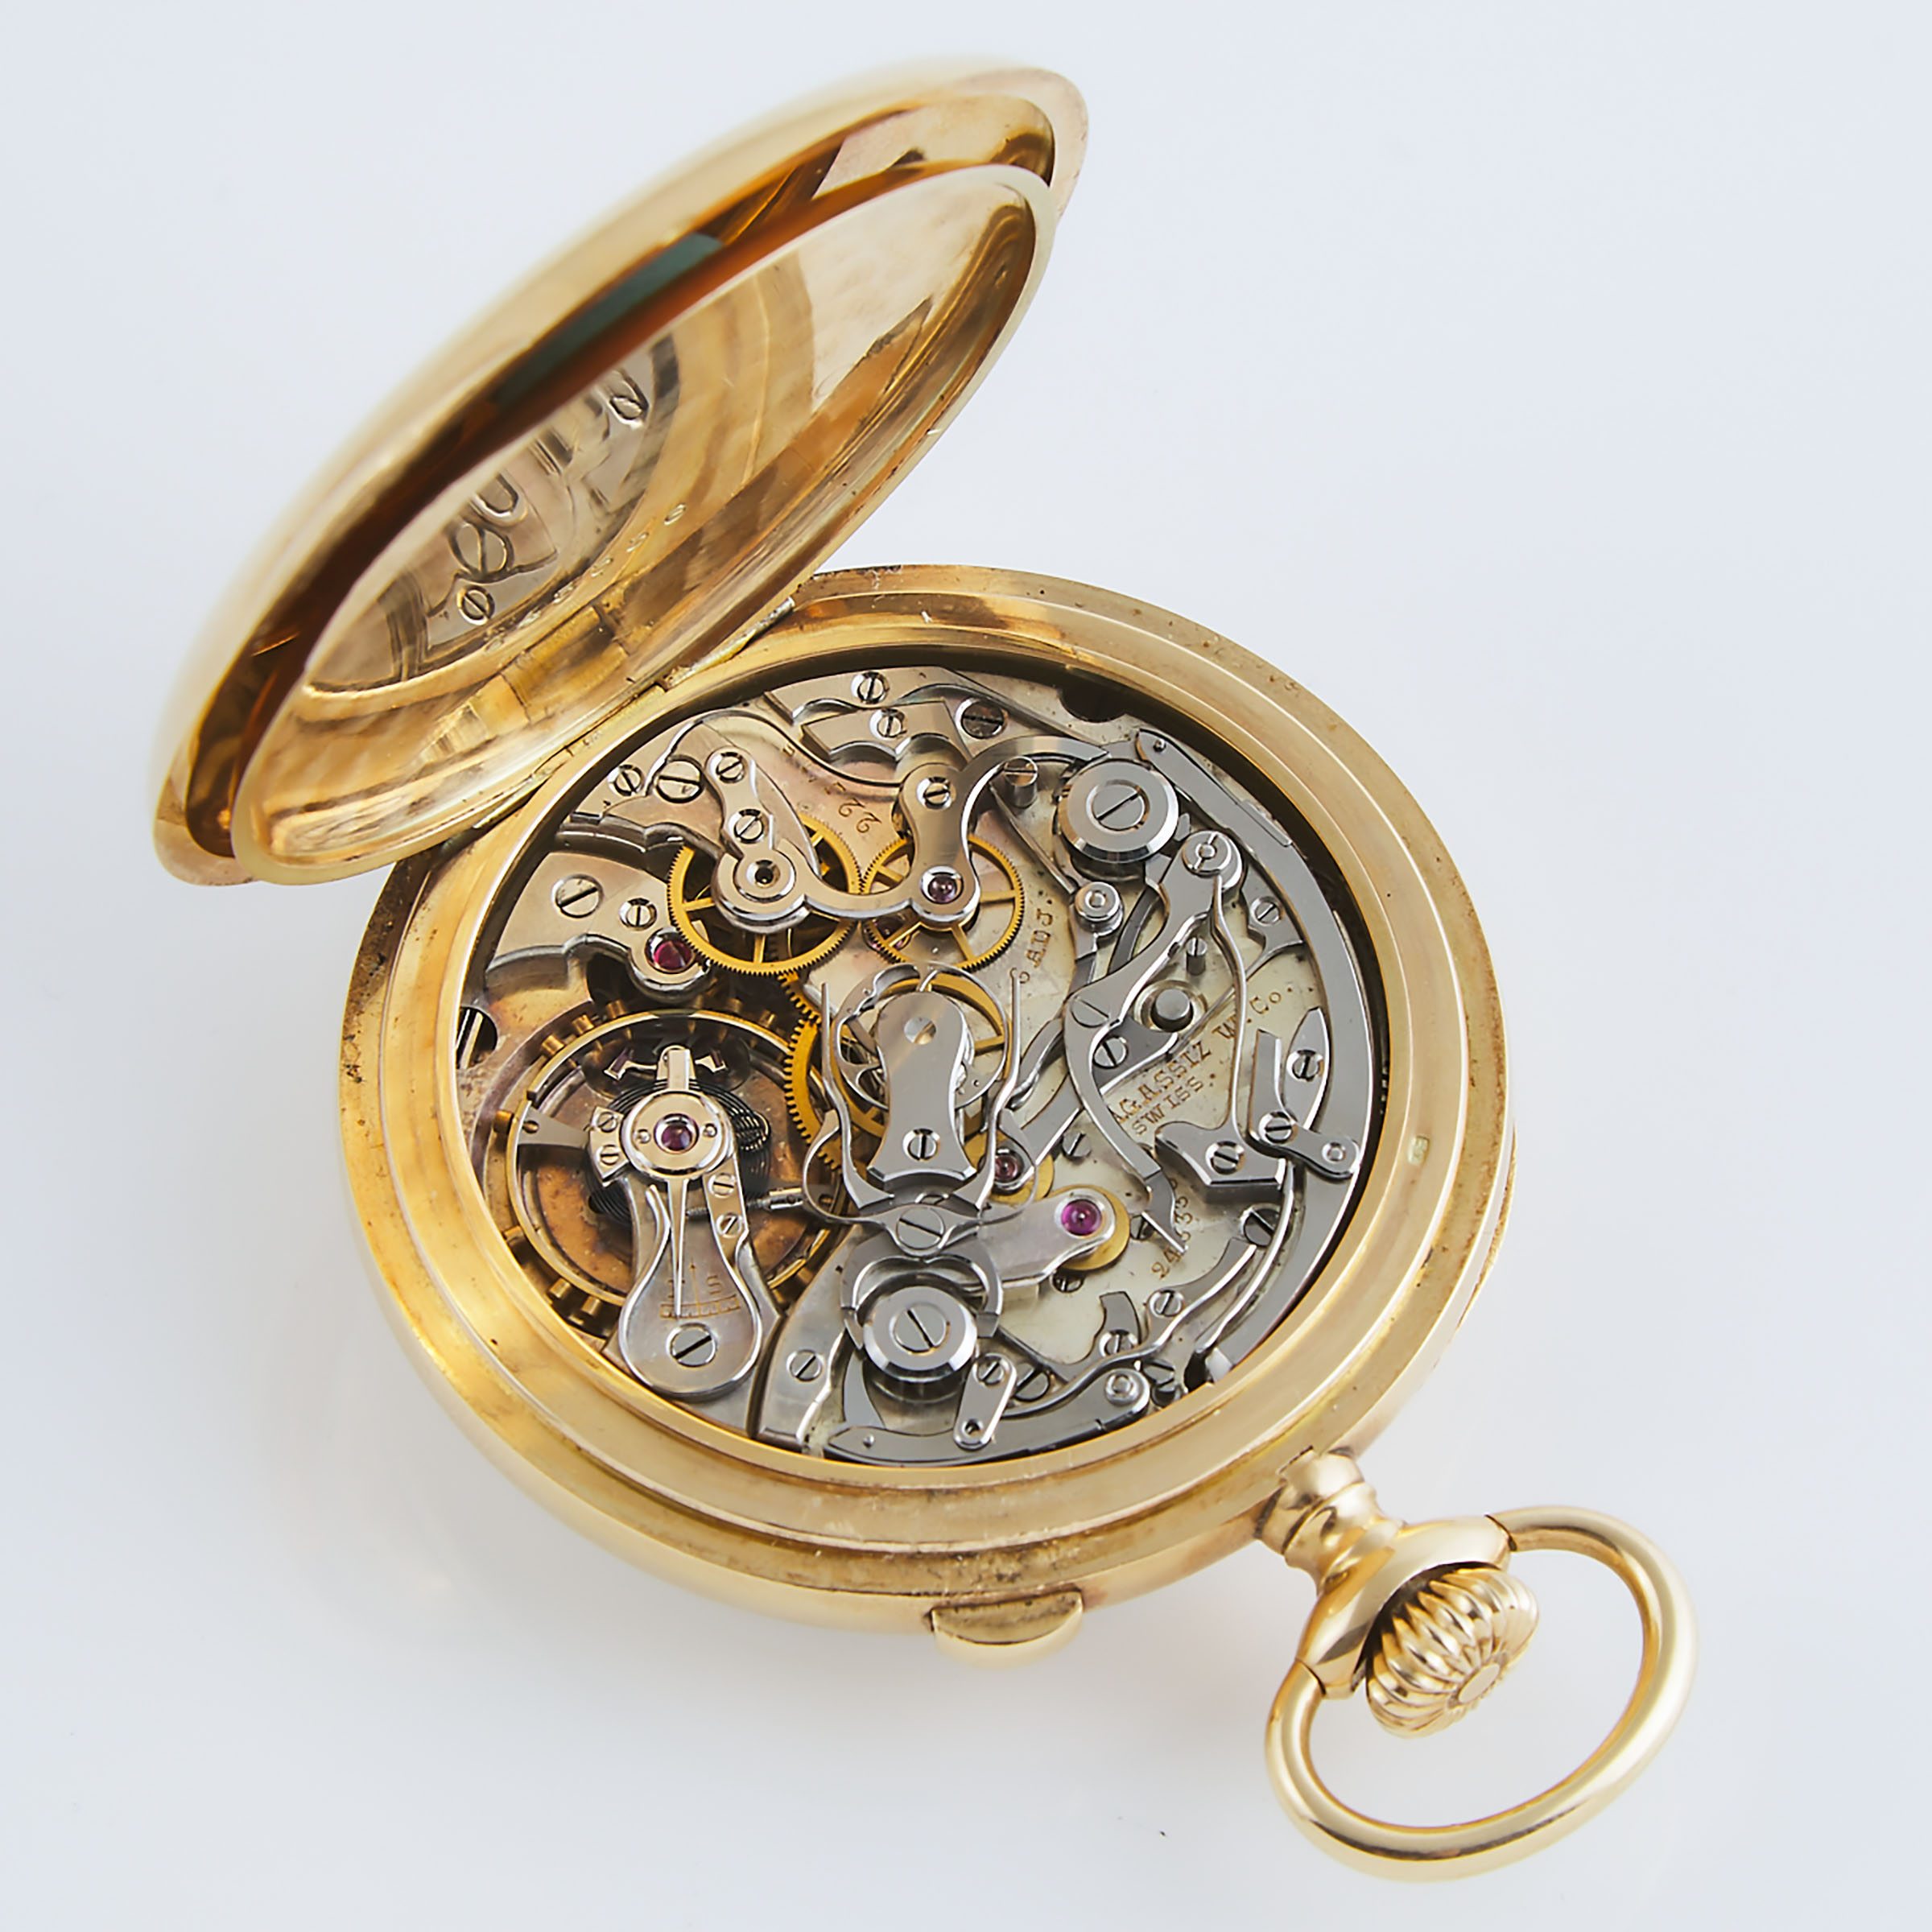 Agassiz Openface Stem Wind Pocket Watch With Split-Second Chronograph